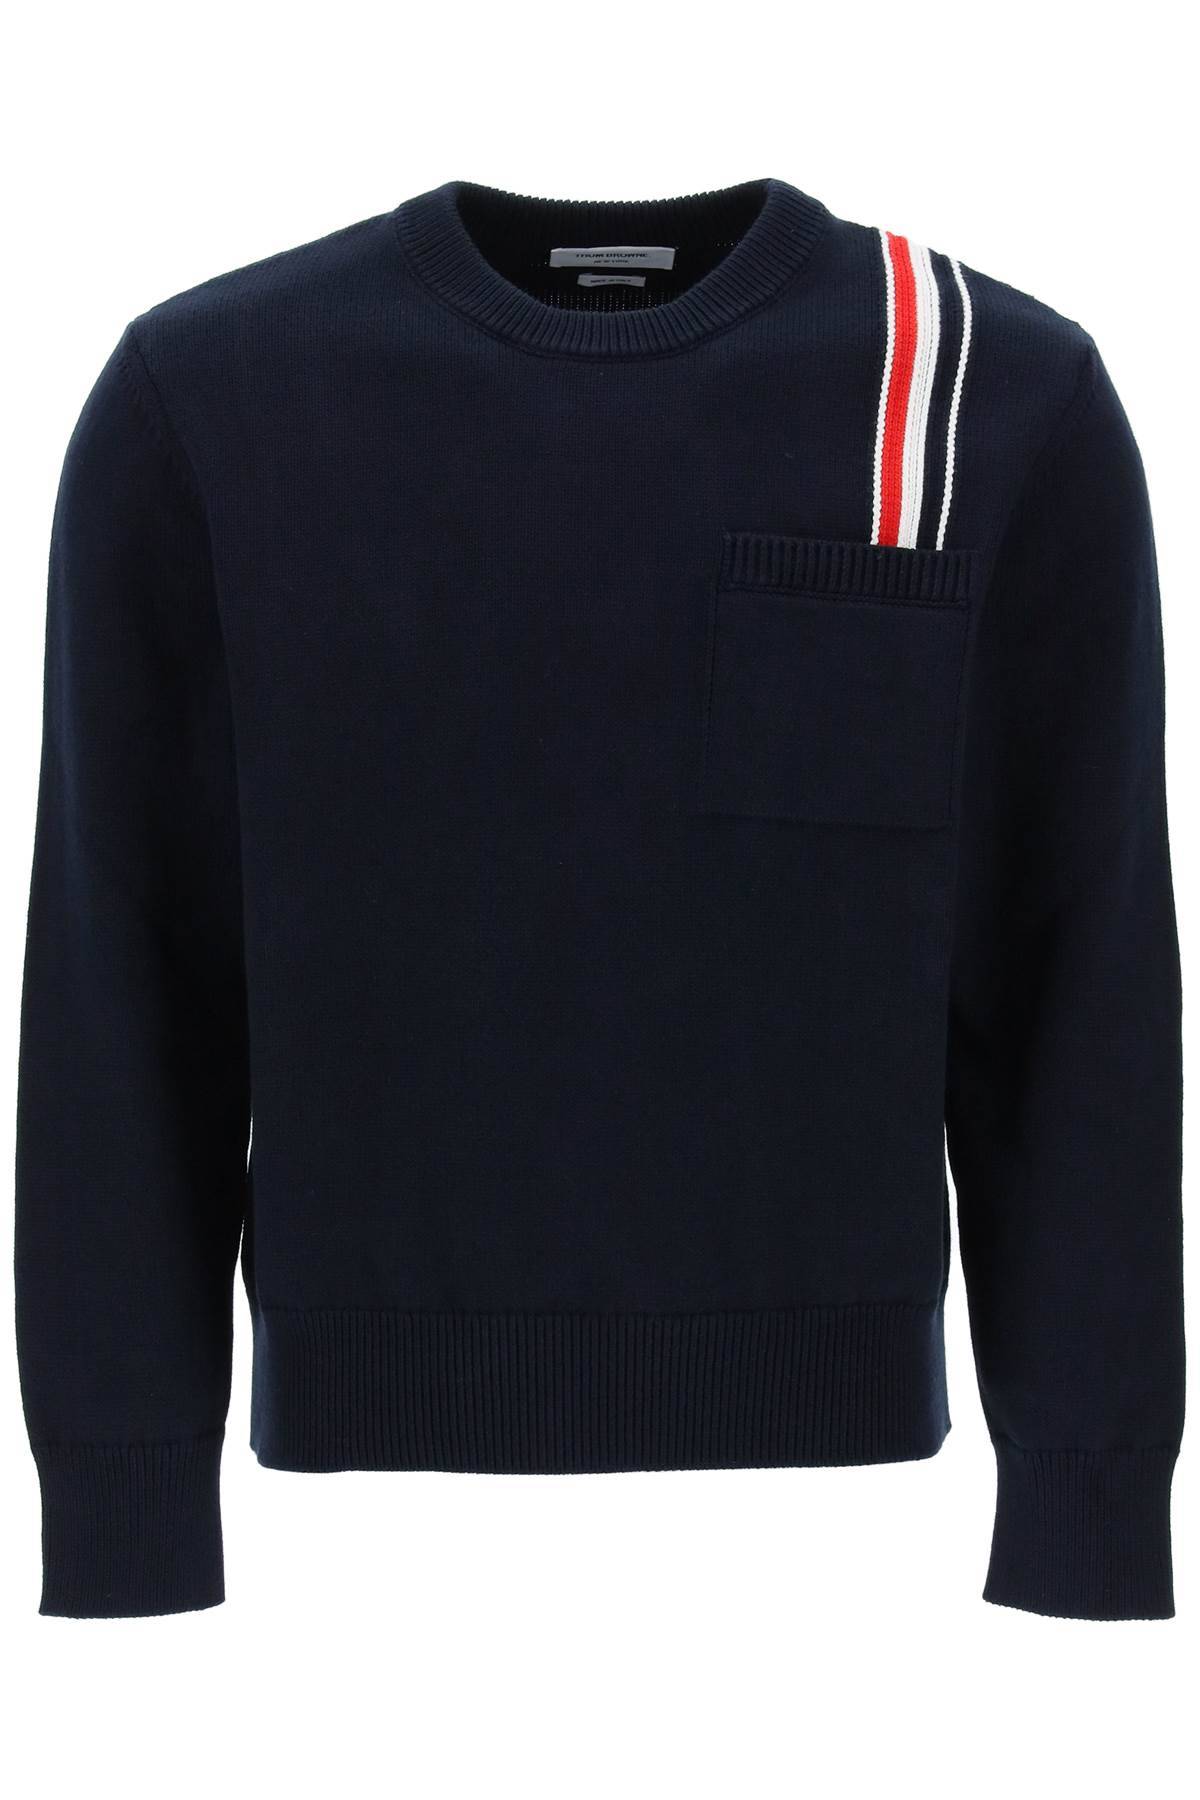 Thom Browne THOM BROWNE cotton pullover with rwb stripe